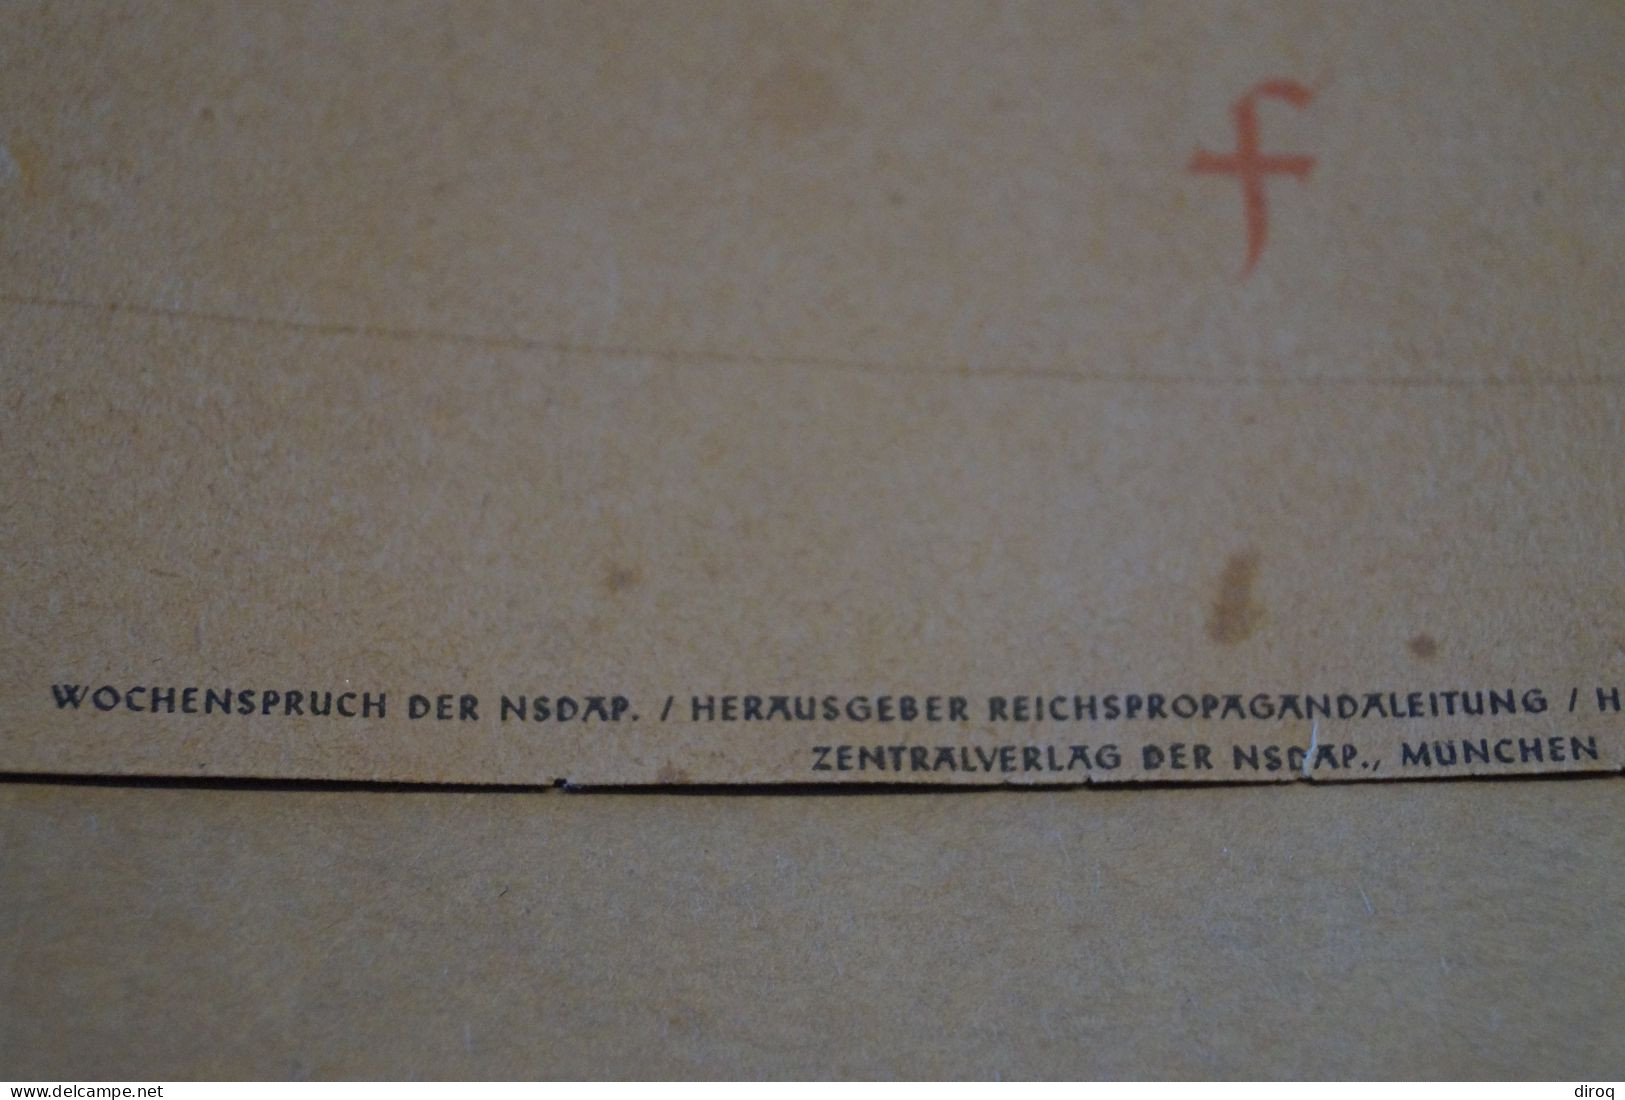 grande affiche de propagande Allemande guerre 40-45,Dr. Goebbels,originale,RARE,350 mm./240 mm